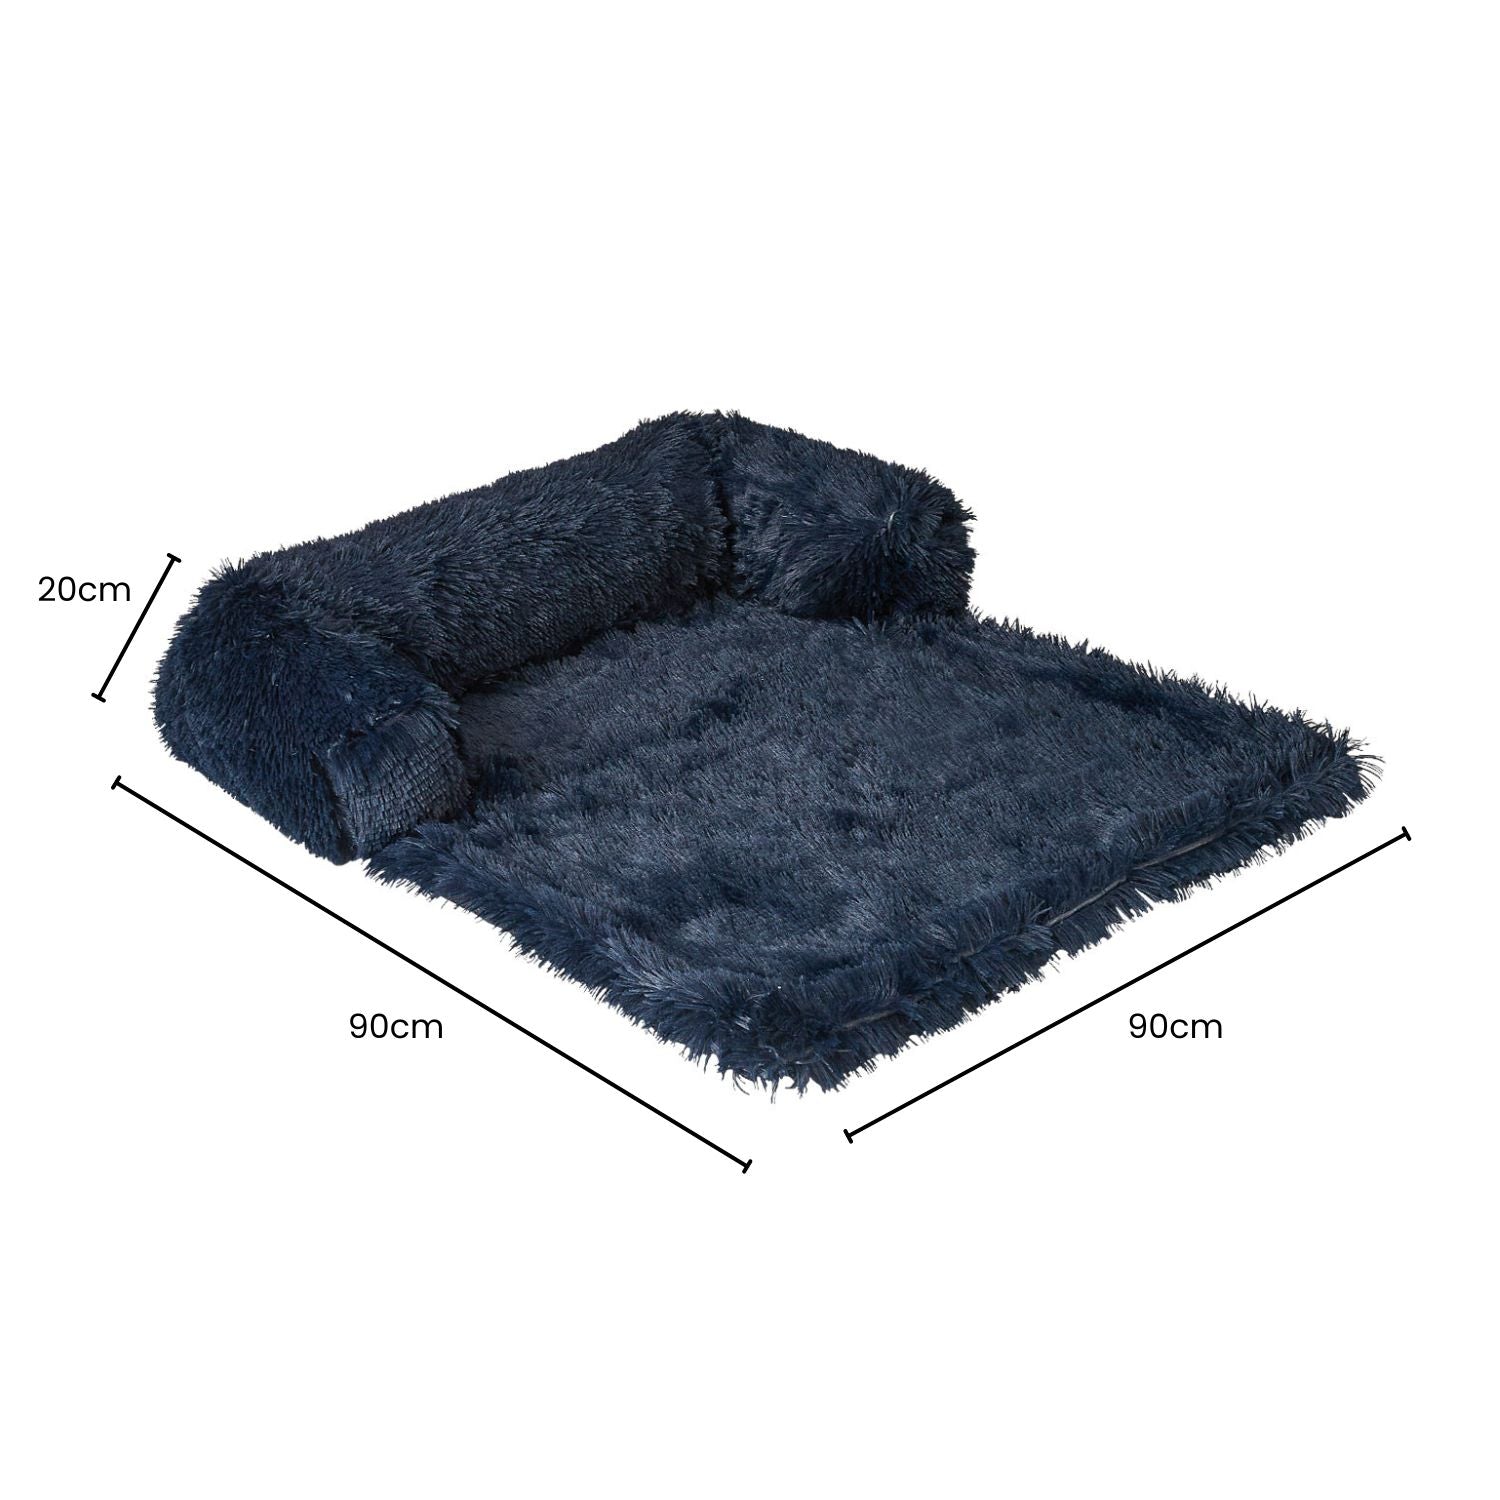 Floofi Pet Sofa Cover Soft with Bolster M Size (Dark Blue)